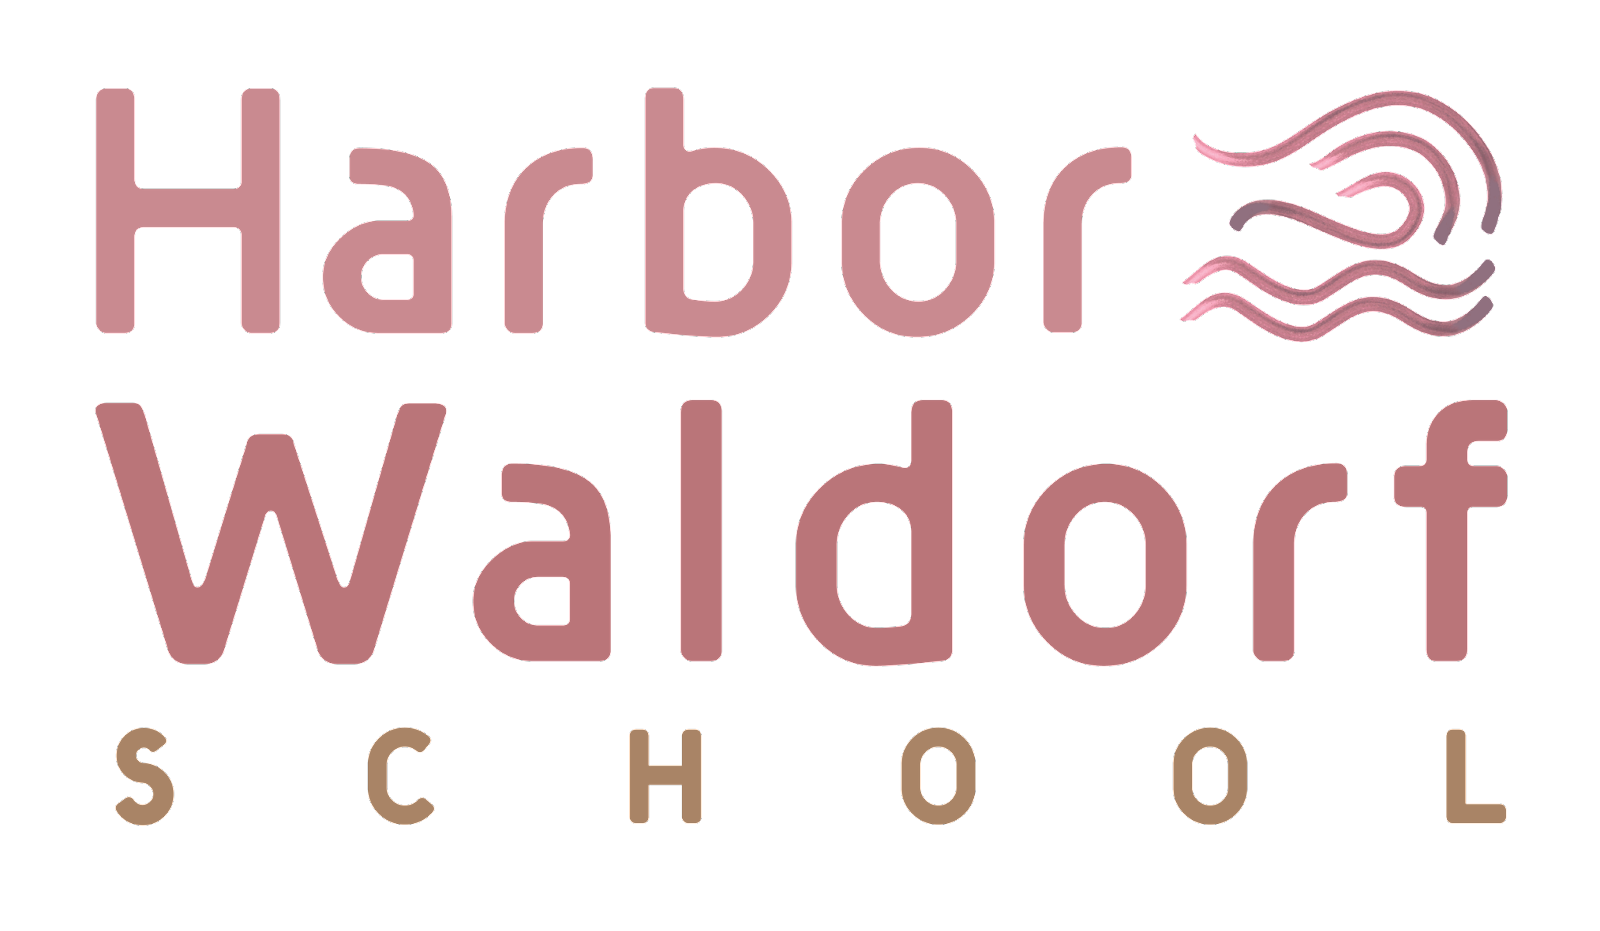 Harbor Waldorf School